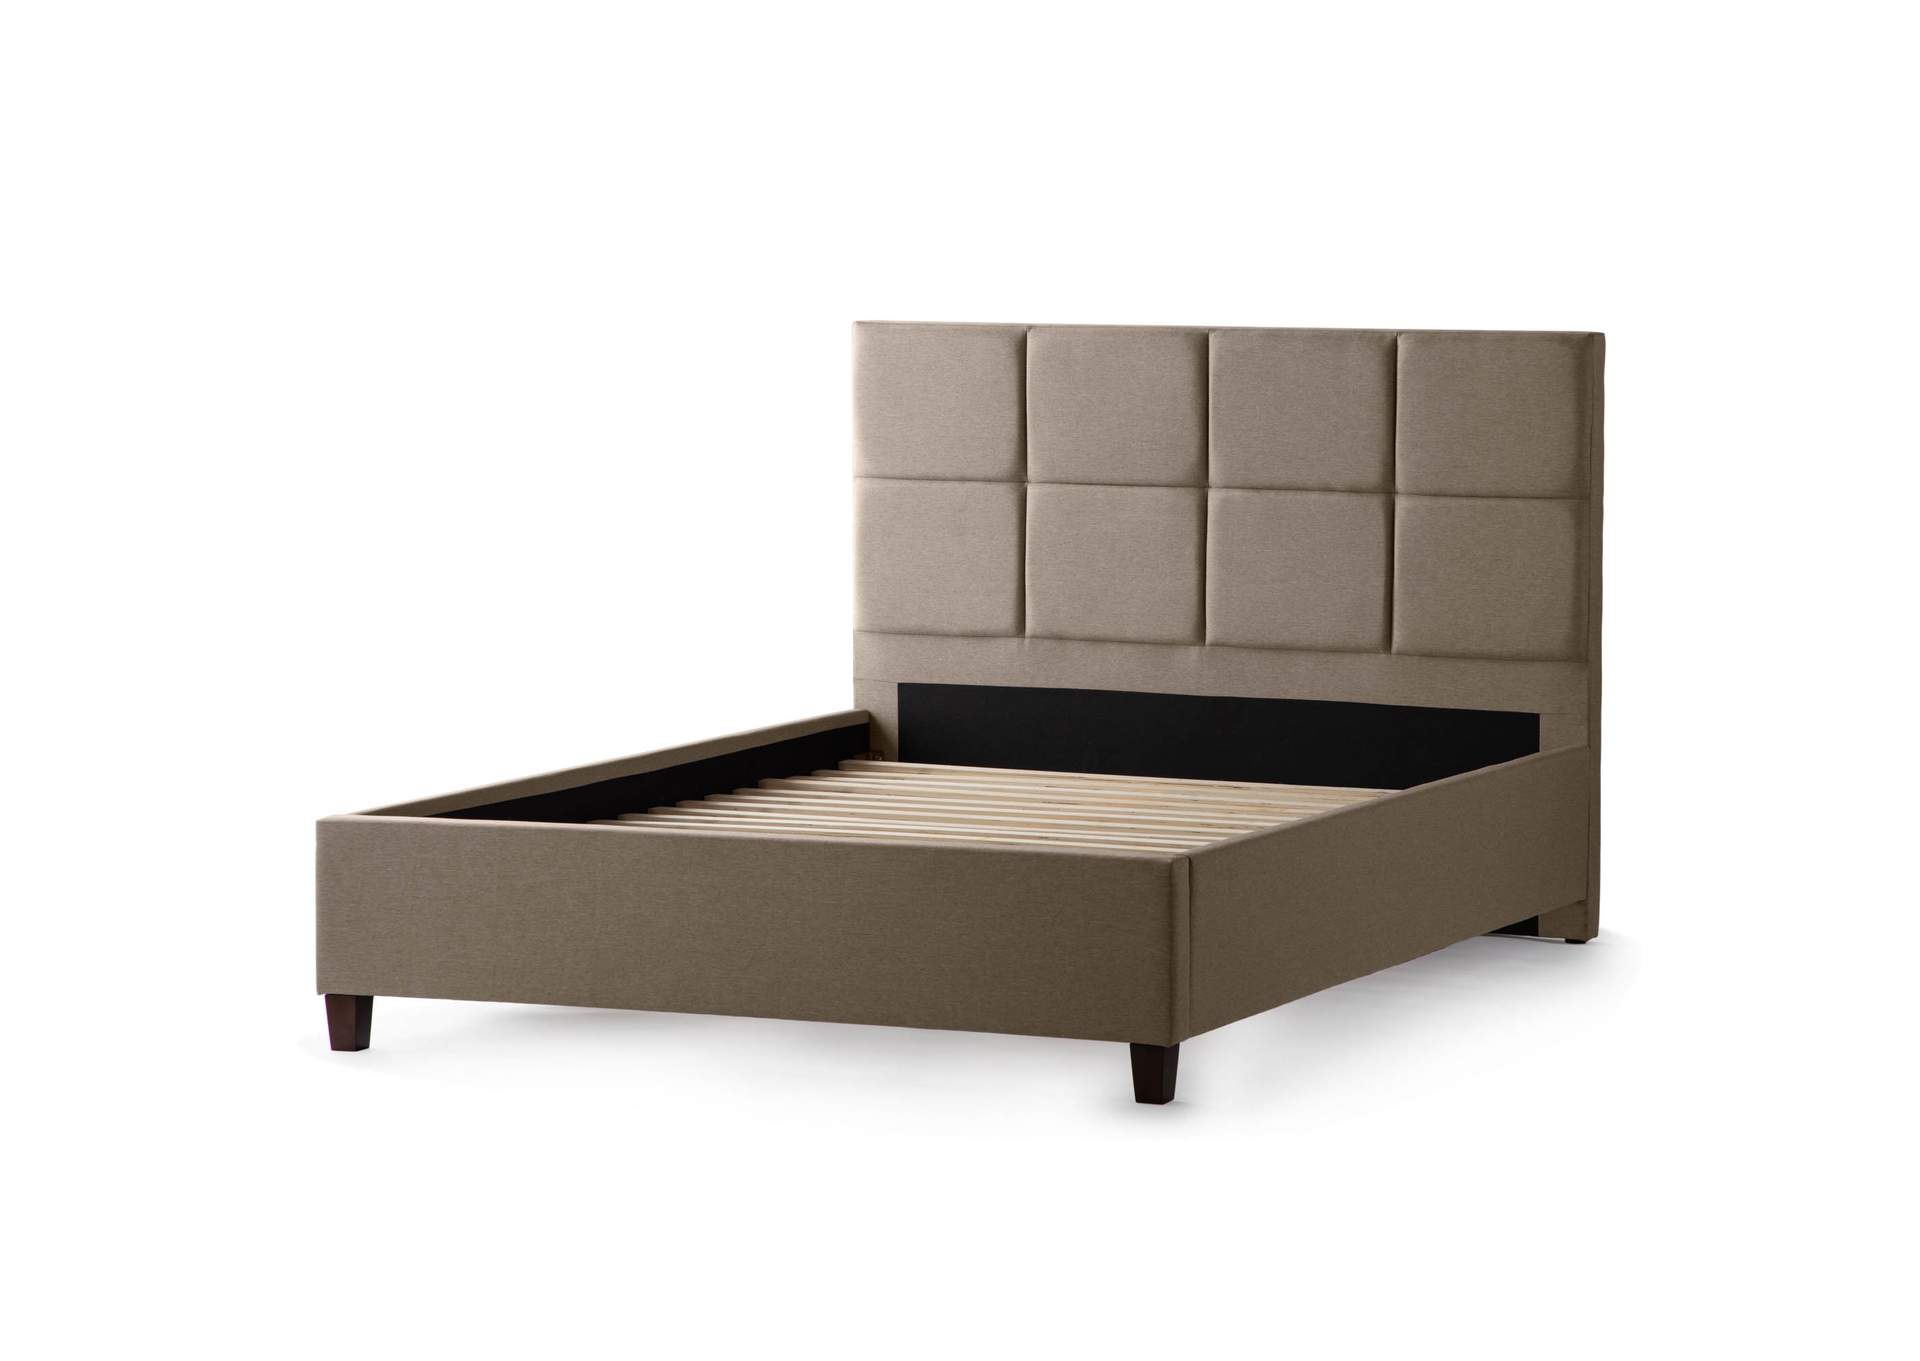 Malouf Oat Scoresby Upholstered Full Bed,Malouf